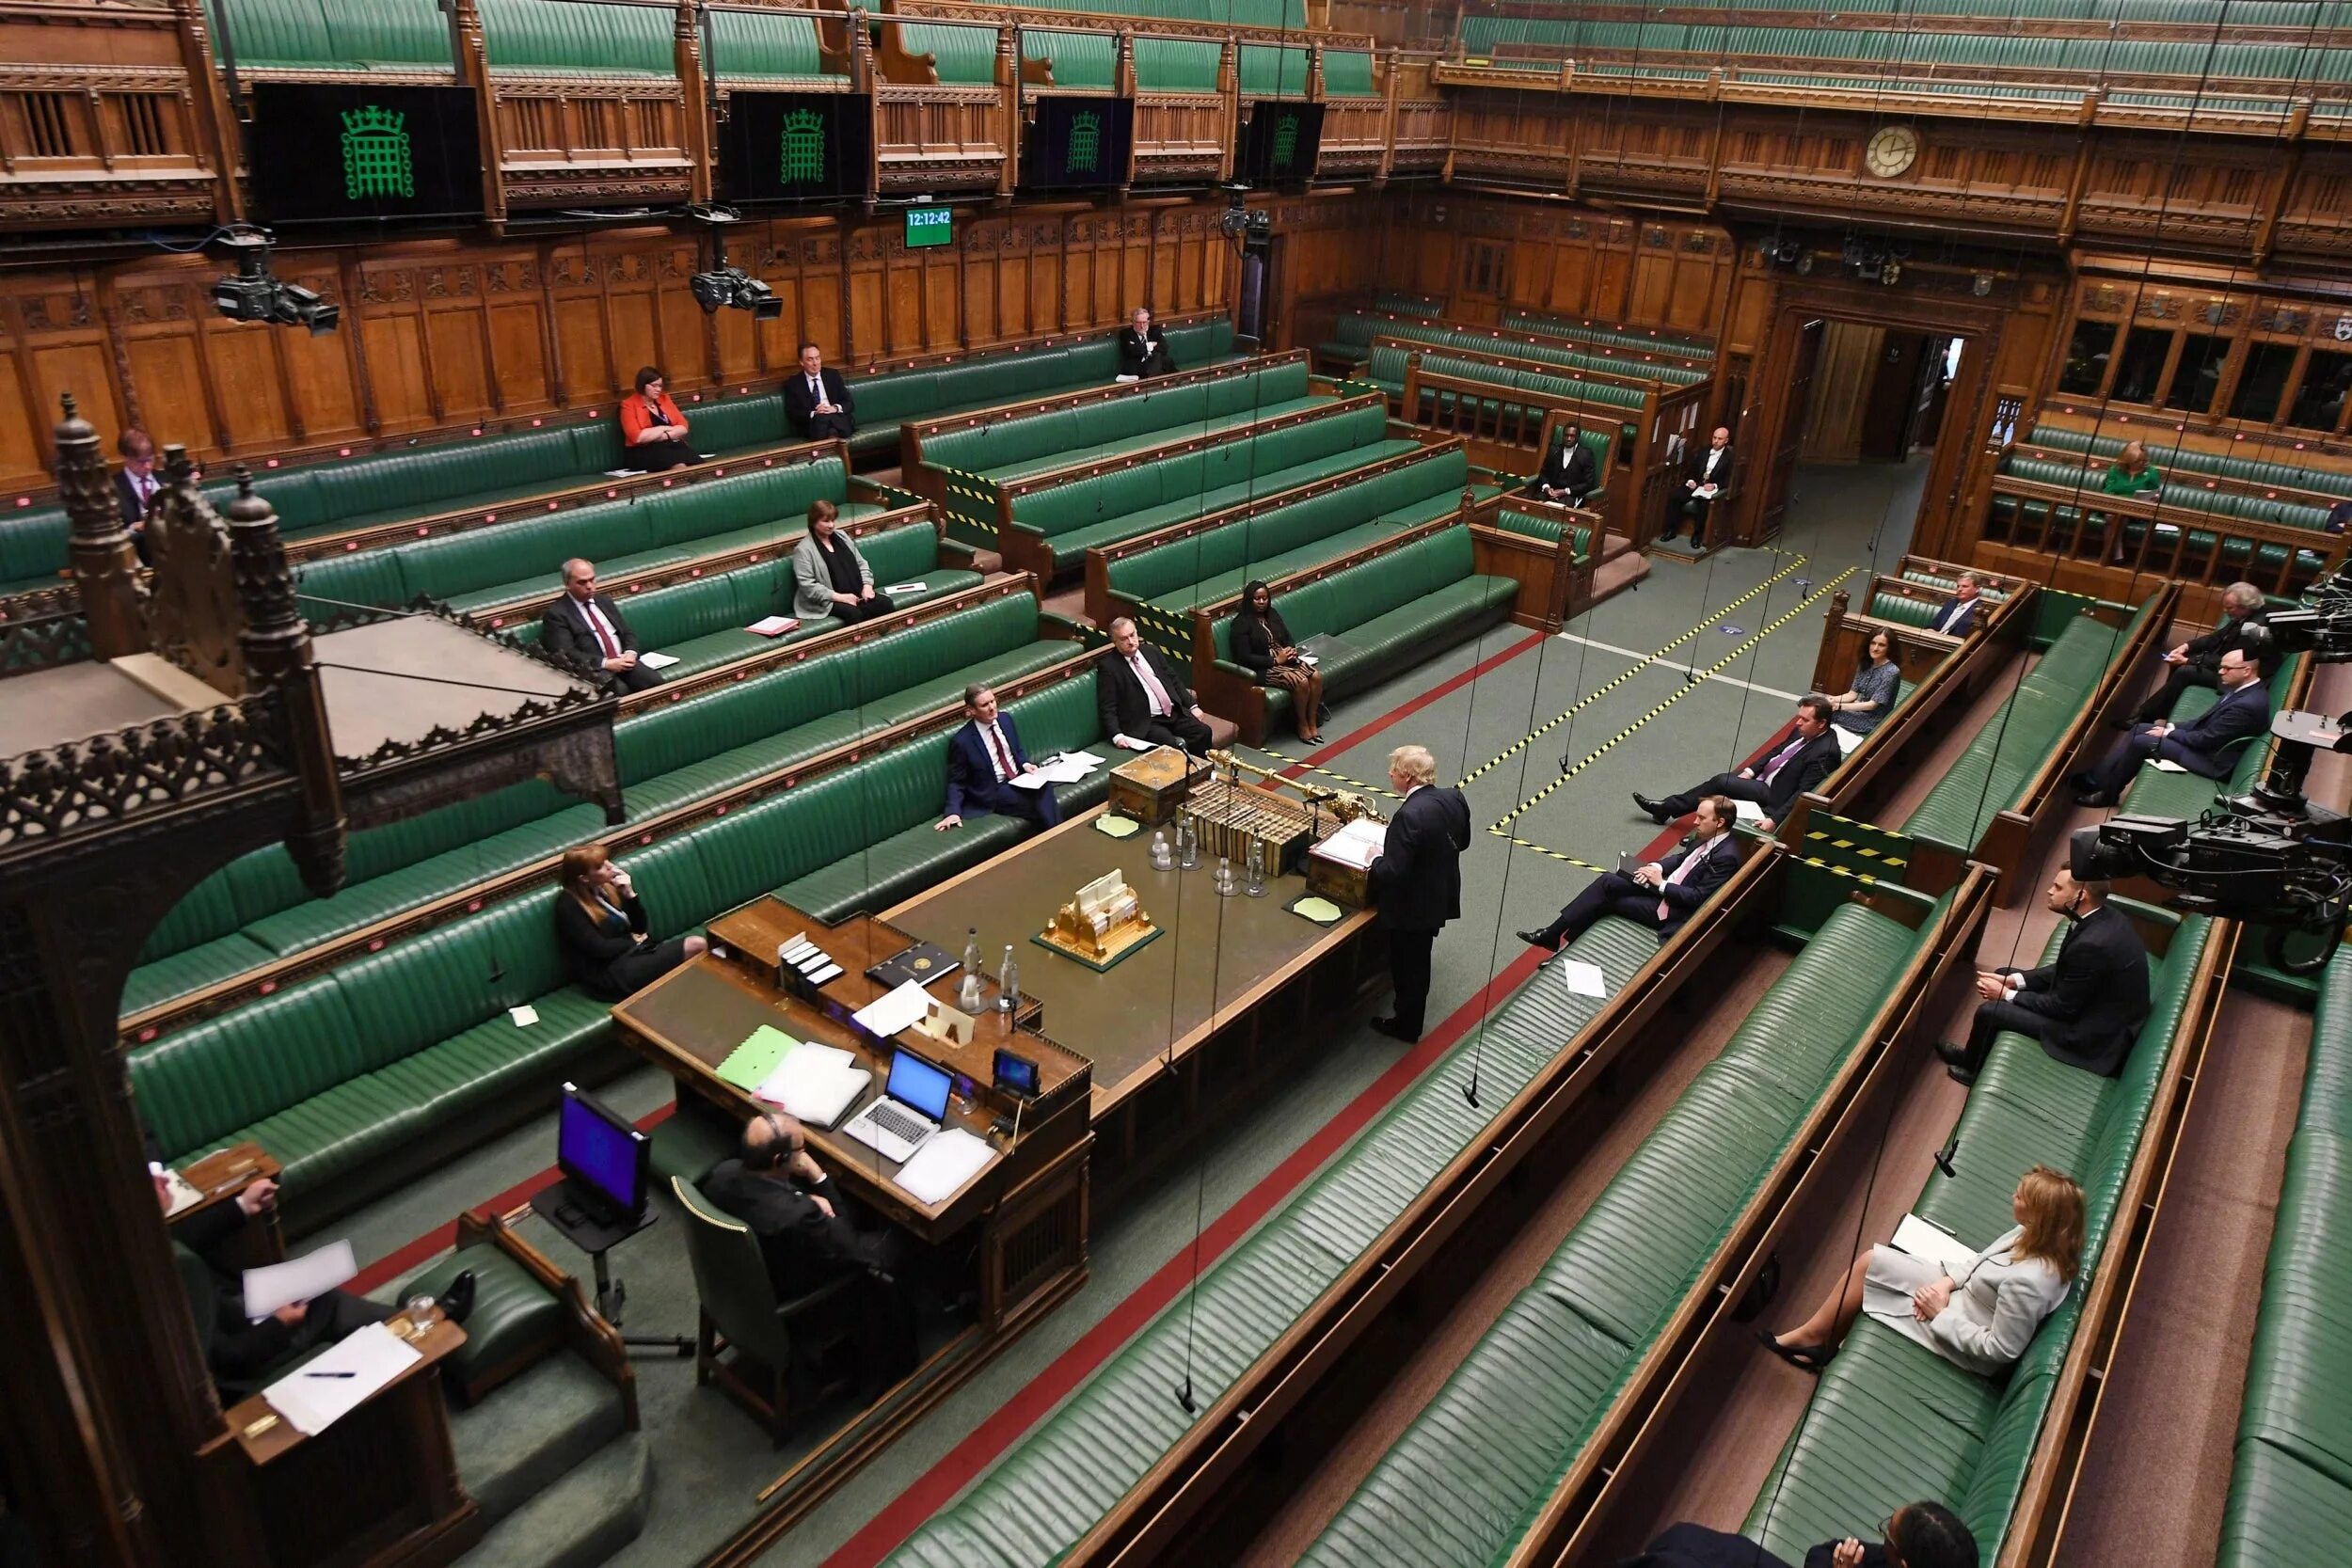 2 the house of commons. Палаты общин (House of Commons). Палата общин (Commons Chamber). Палата общин Великобритании. Палата общин 1819 Англия.